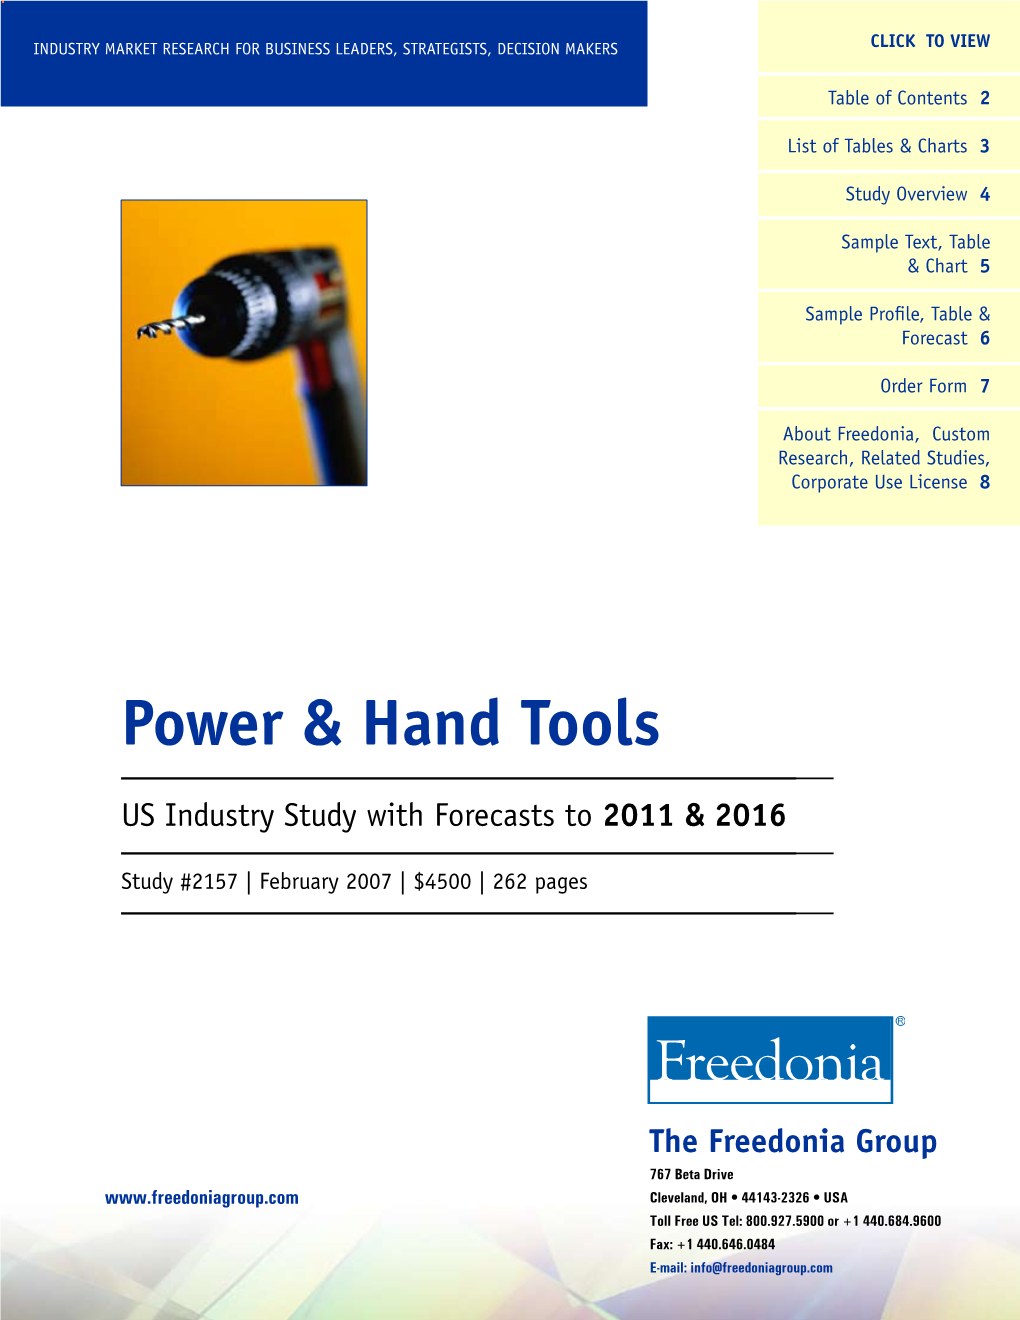 Power & Hand Tools